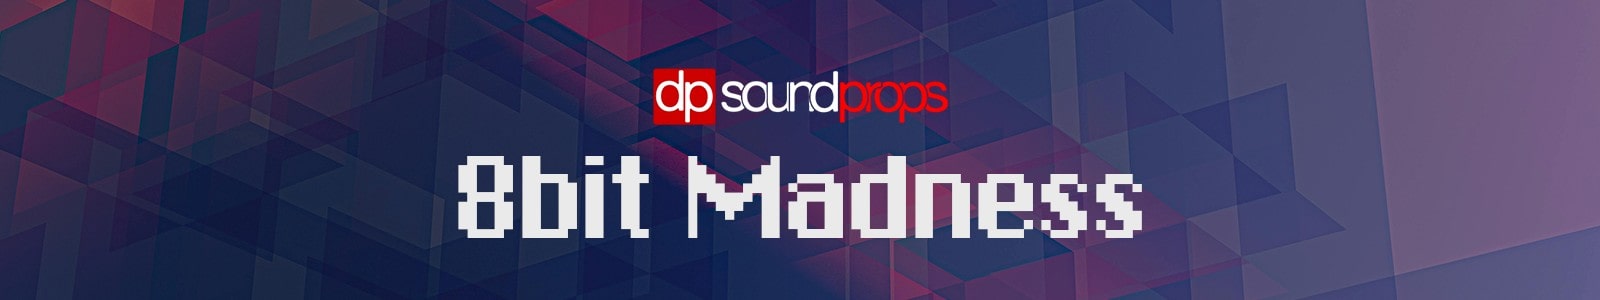 Sound Props 8-bit Madness